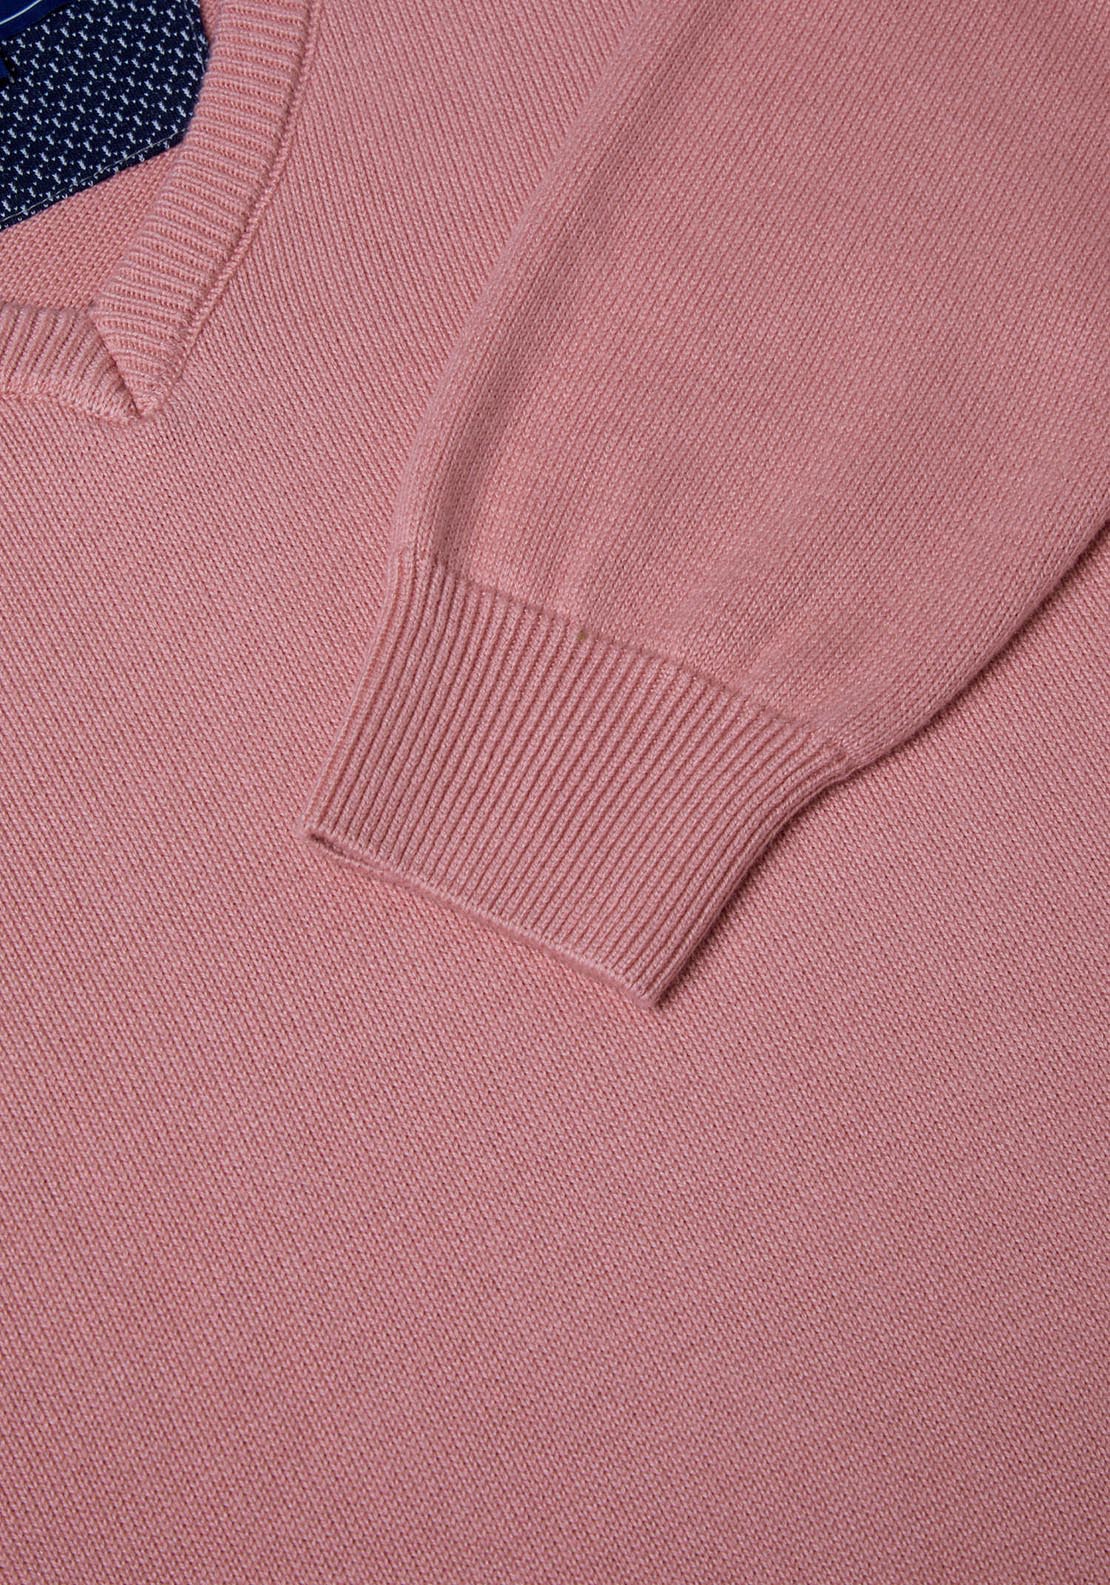 Drifter V Neck Cotton Knitwear - Pink 3 Shaws Department Stores